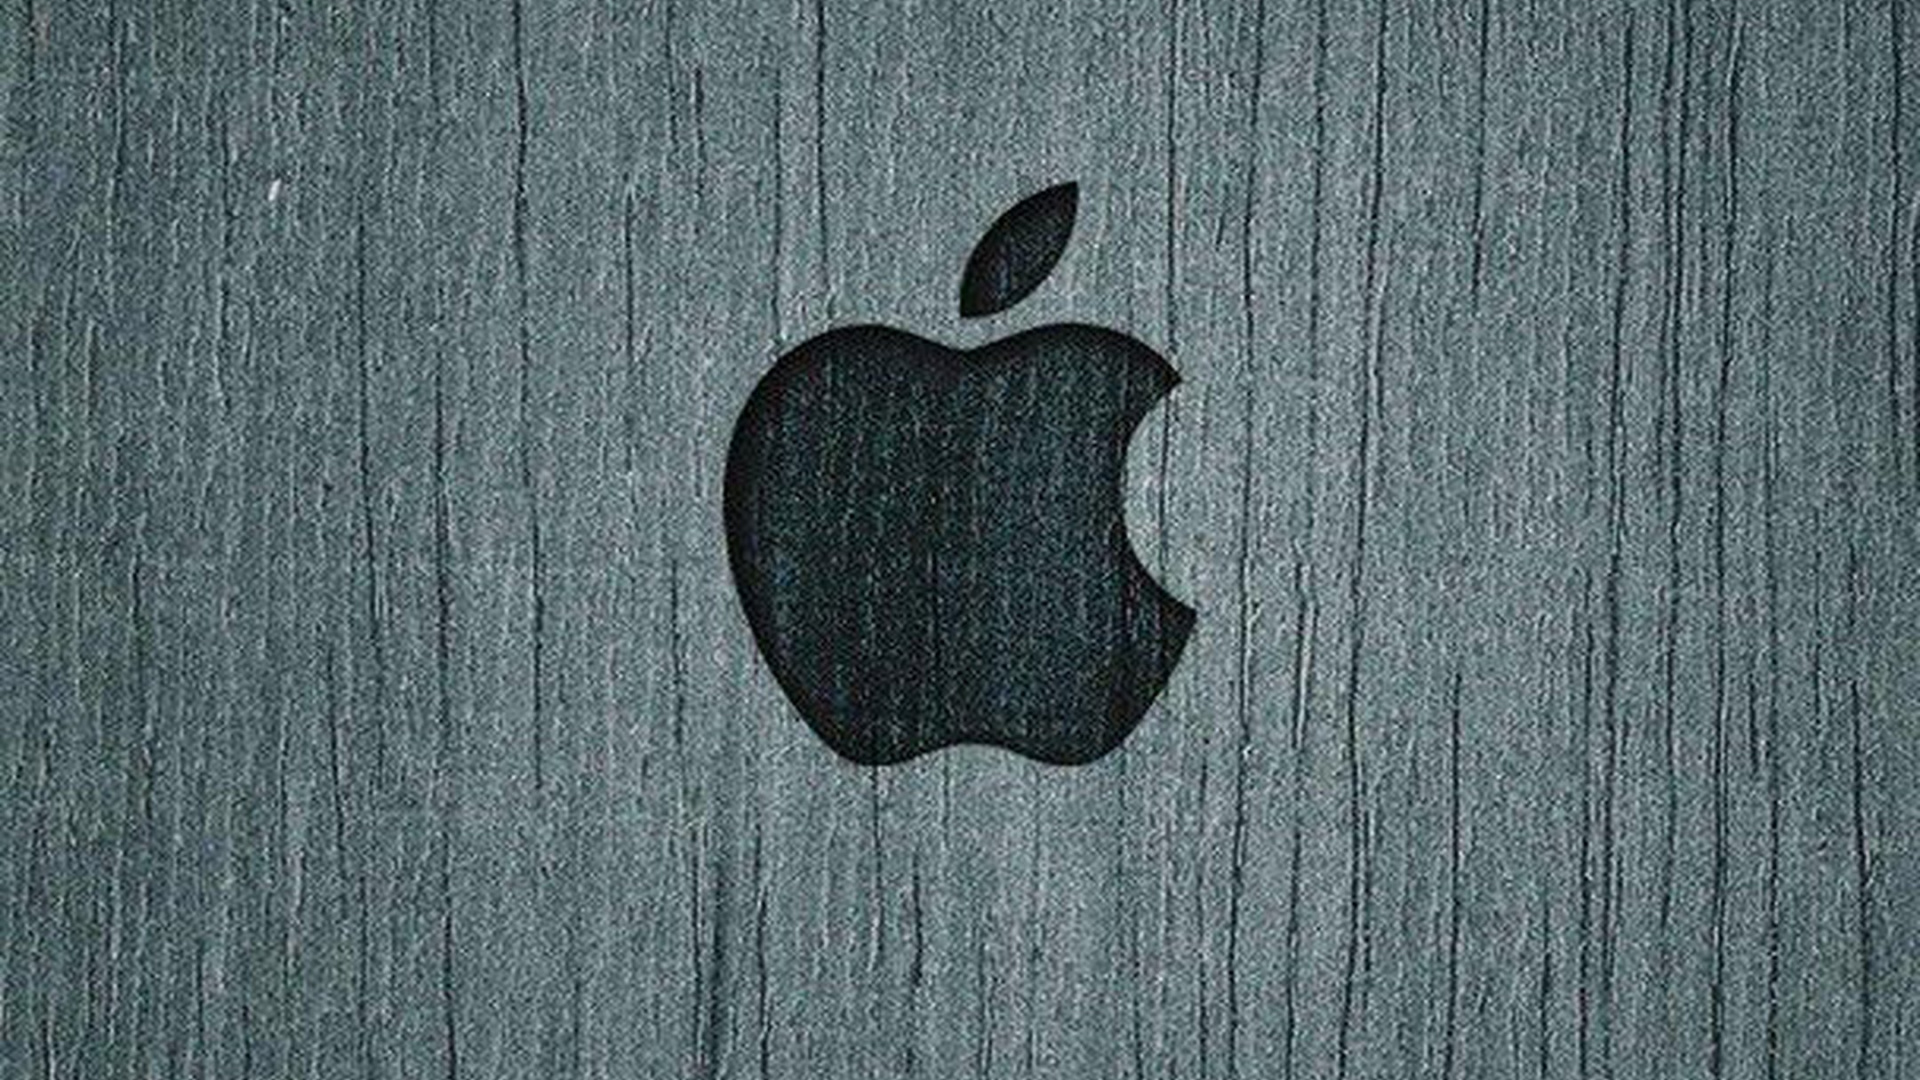 Тик обои на айфон. Обои Графика эйпл. Обои на рабочий стол 1920х1080 яблоко на фоне ламината. Черное дерево на айфон. Apple яблоко текстура обои.